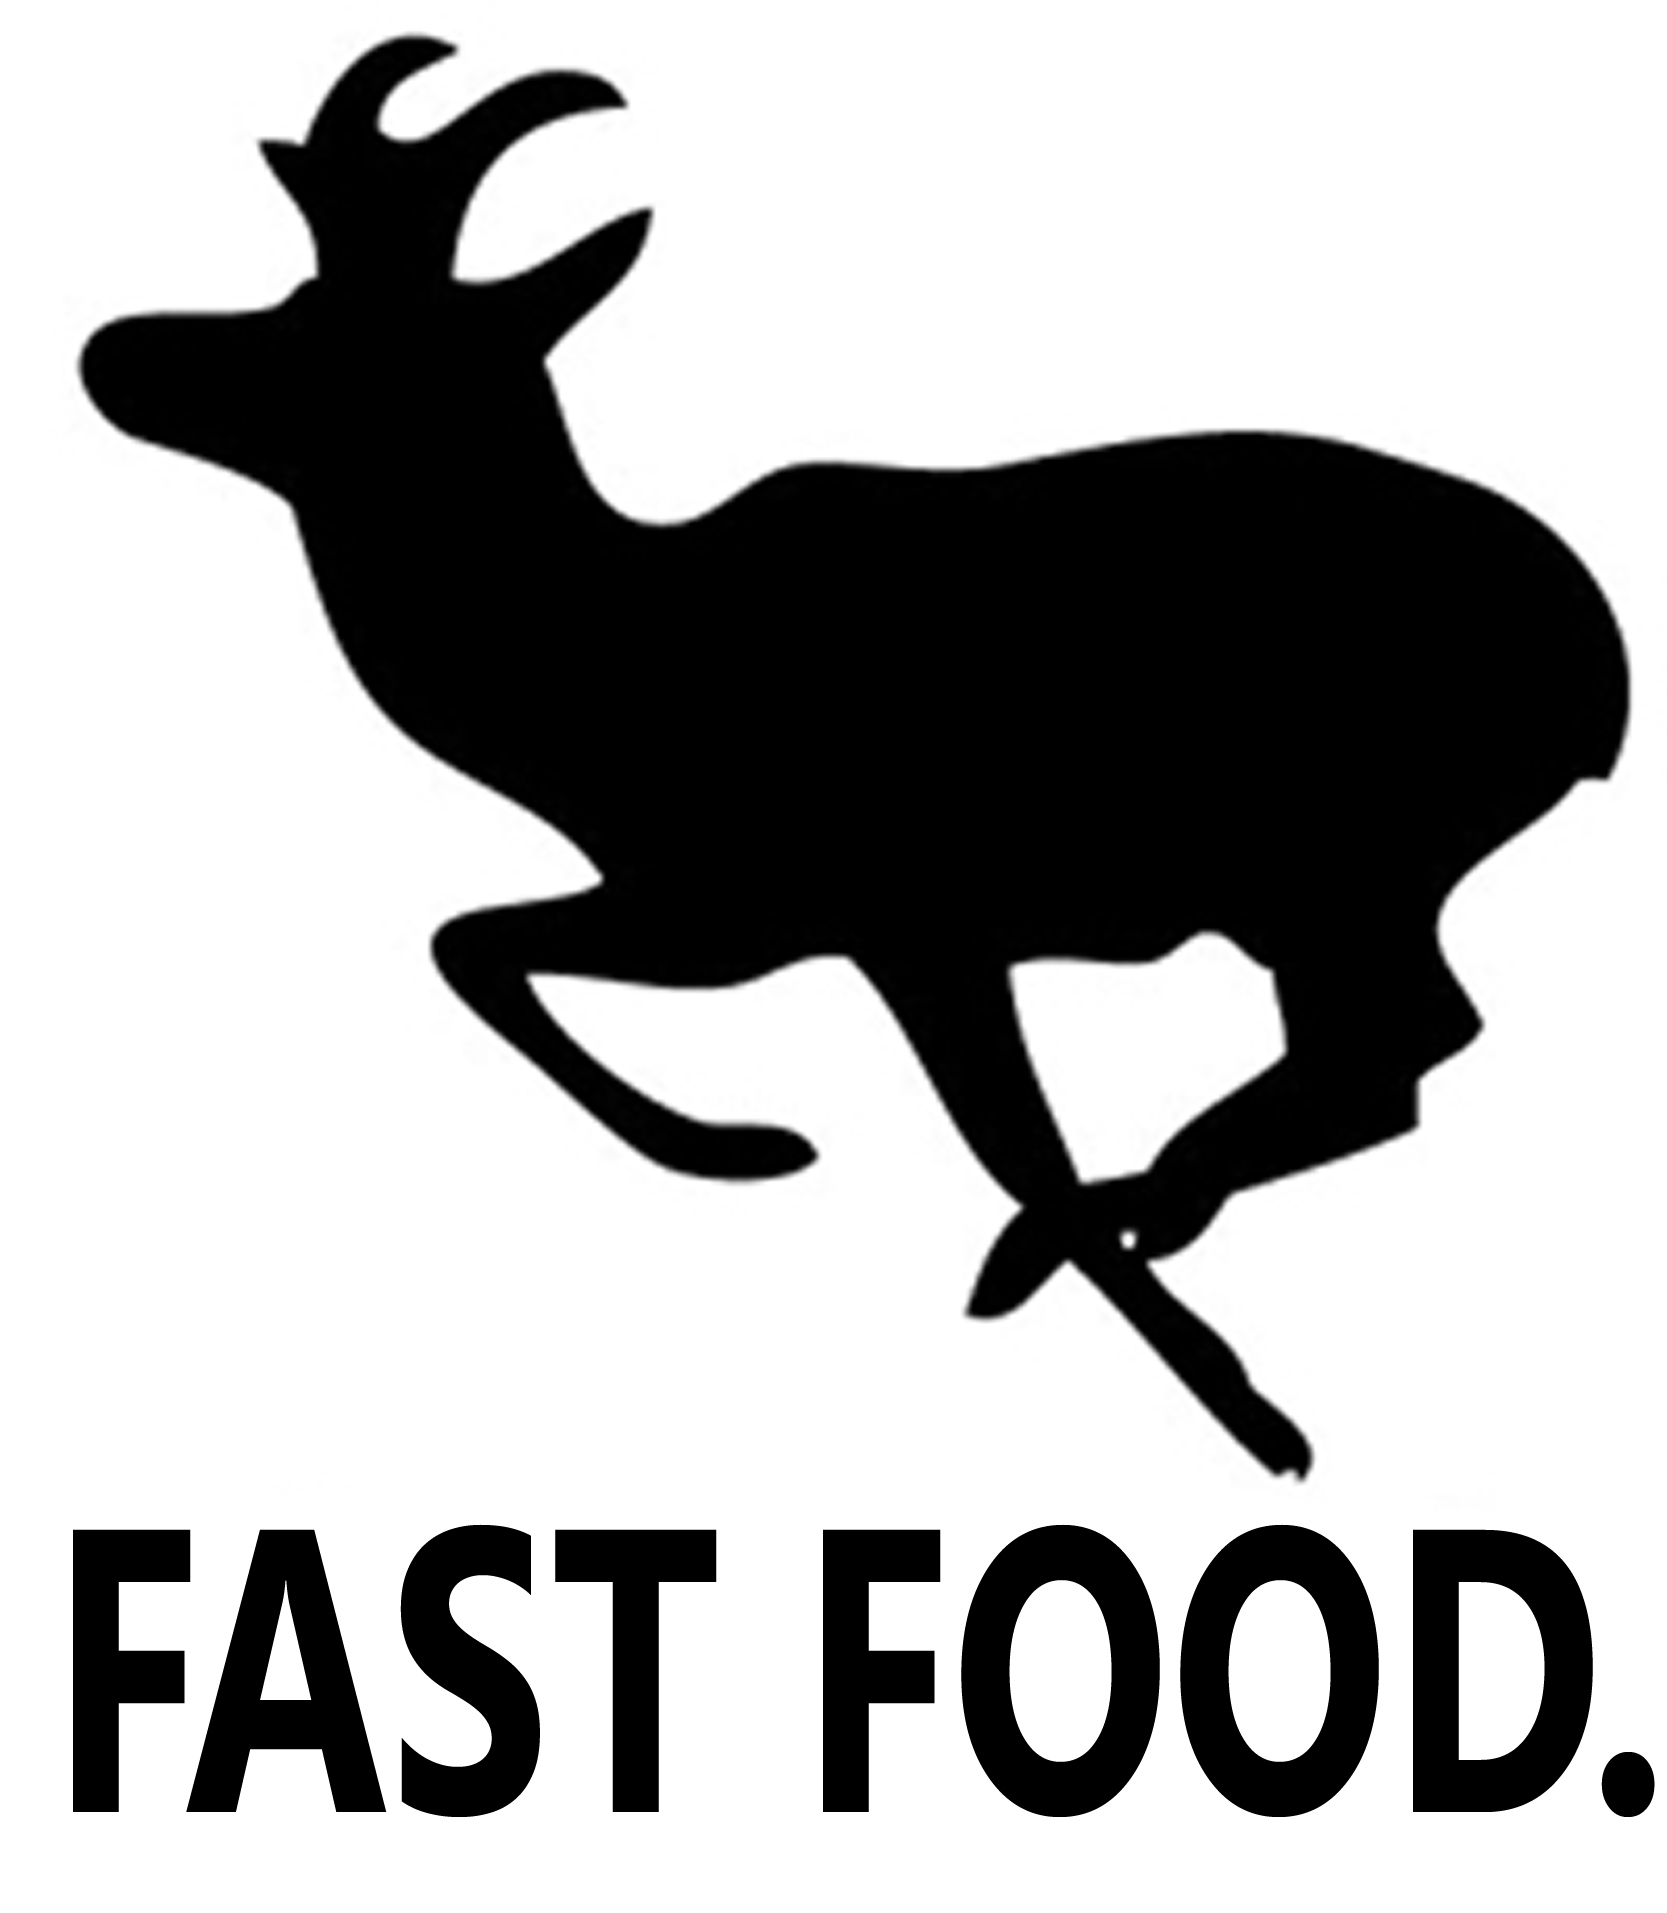 Fast Food Deer Sticker